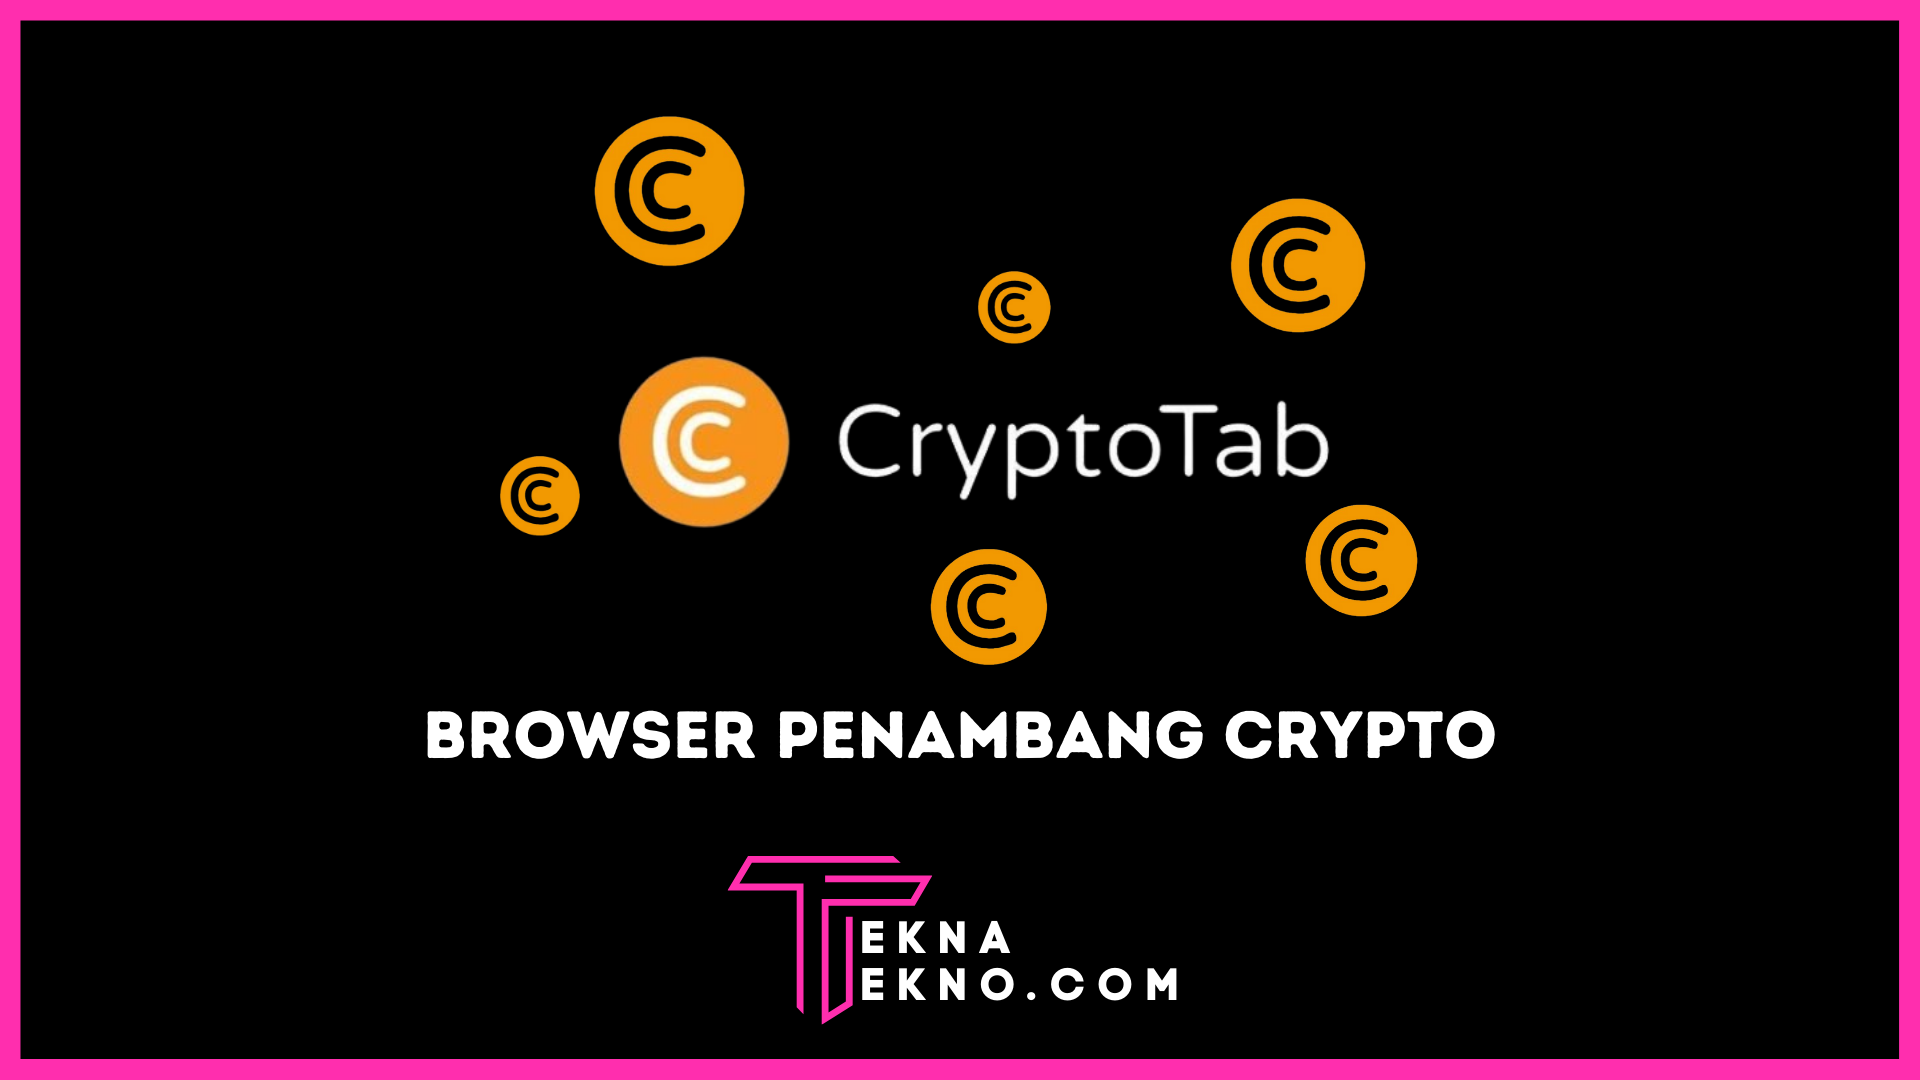 Apa itu Cryptotab? Browser yang Wajib Penambang Crypto Tau